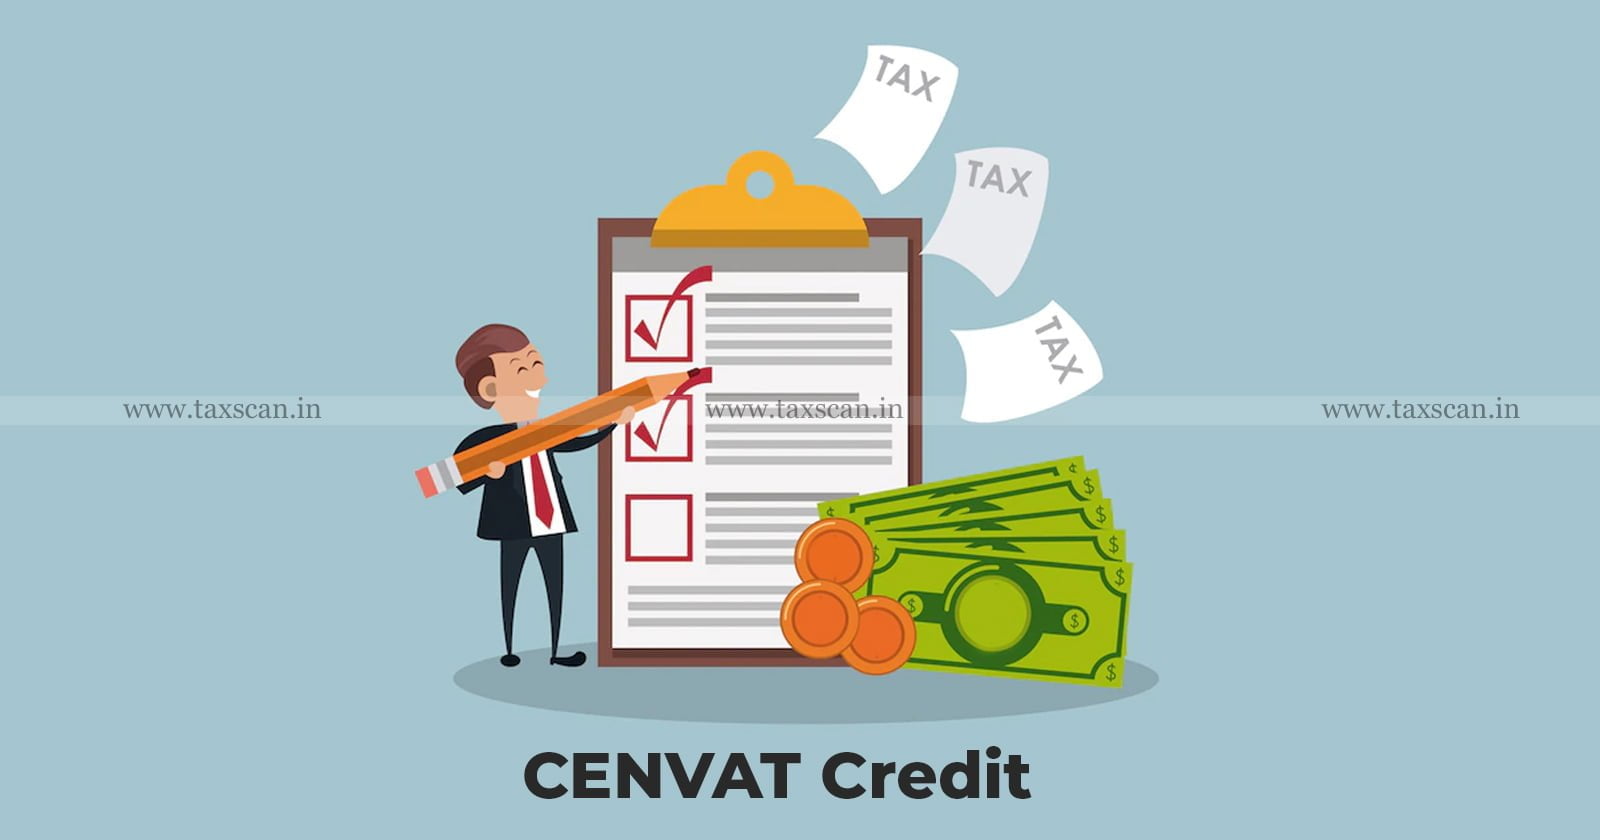 Refund Claim of Cenvat Credit - Refund Claim - Cenvat Credit - Input Service - Finished Goods - CESTAT upholds Refund - Contrary Evidence - taxscan